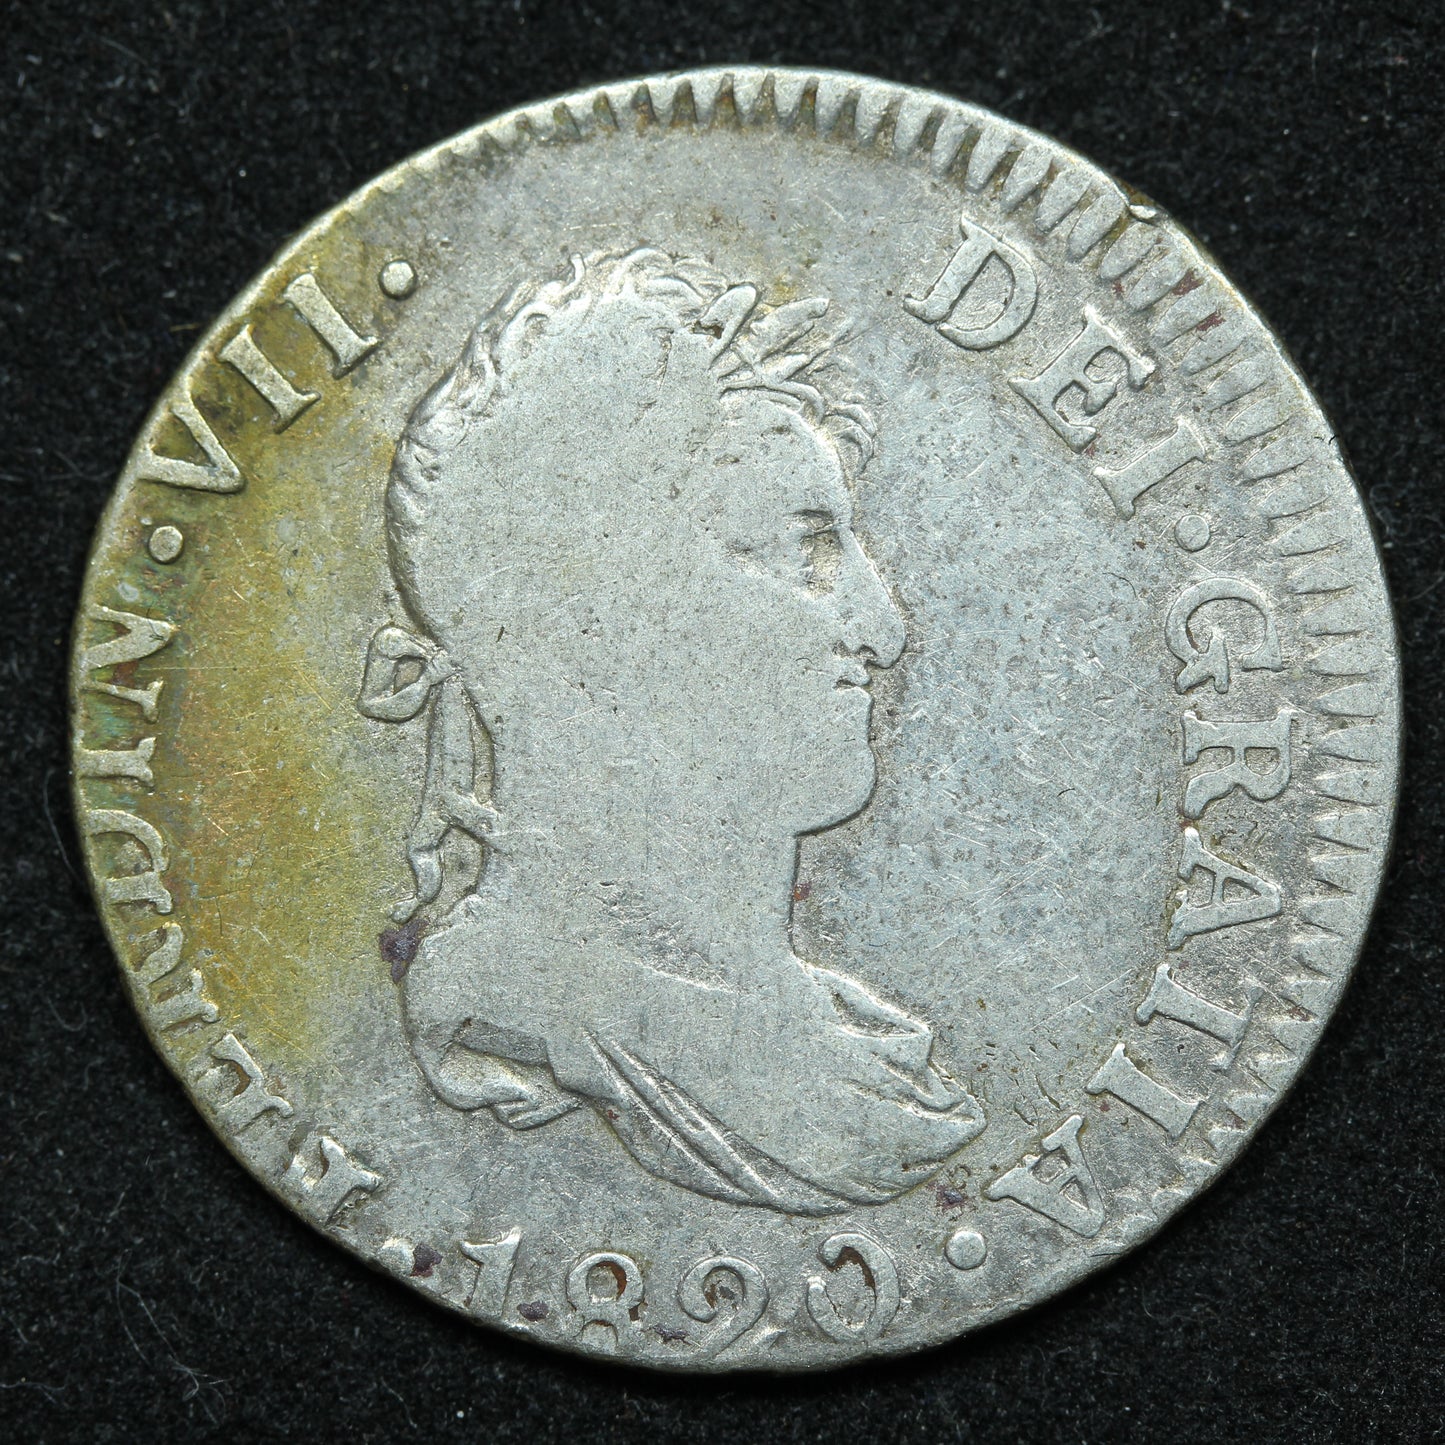 1820 2 Reales CJ Spain Silver Coin - Ferdin VII